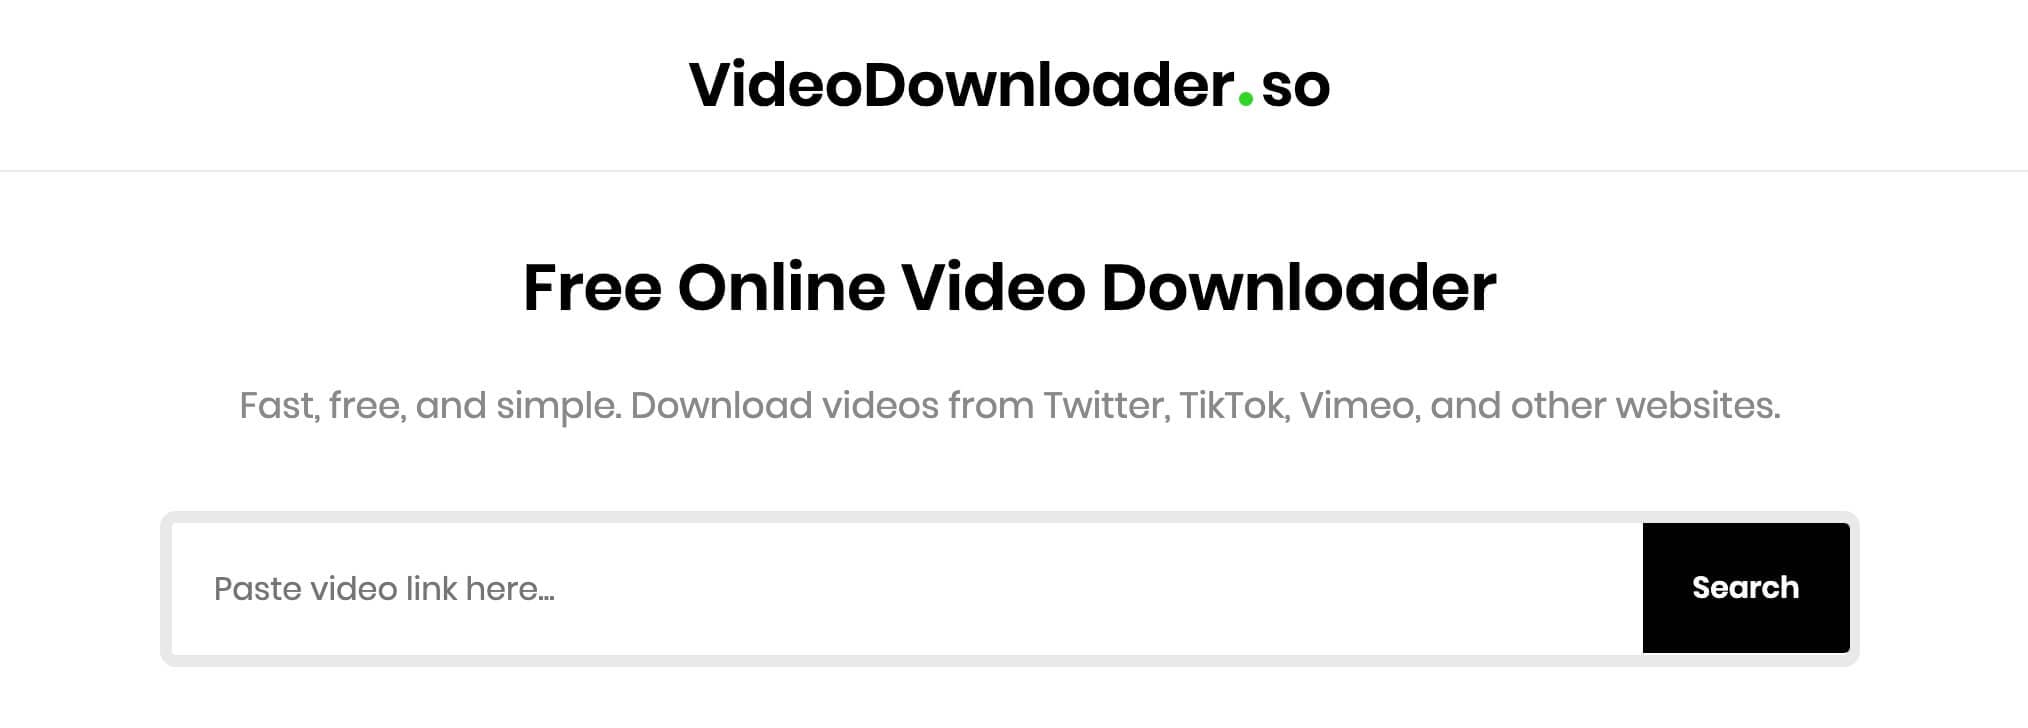 rumble video downloader by videodownloader.so